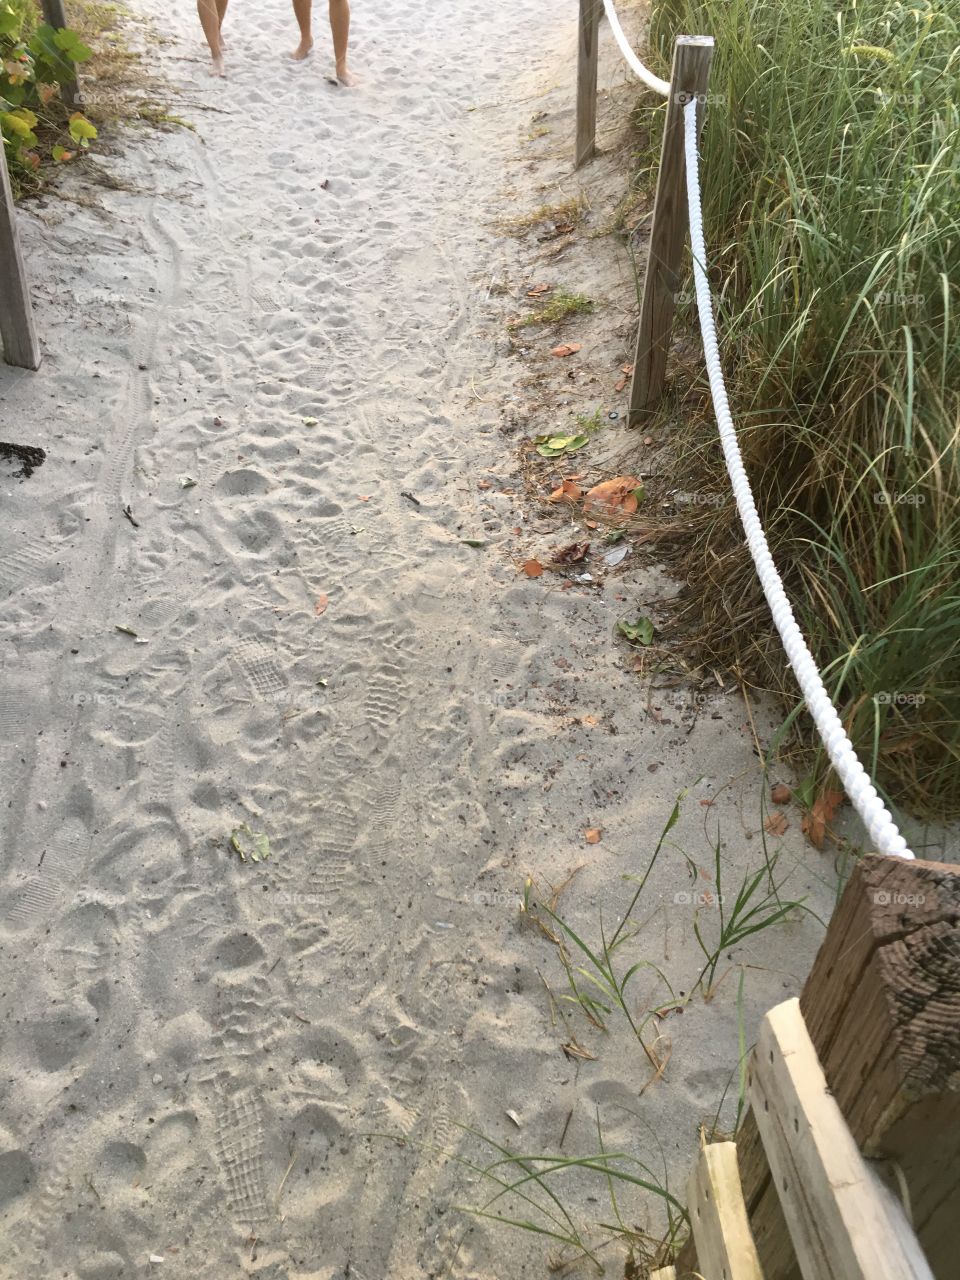 Beach walkway